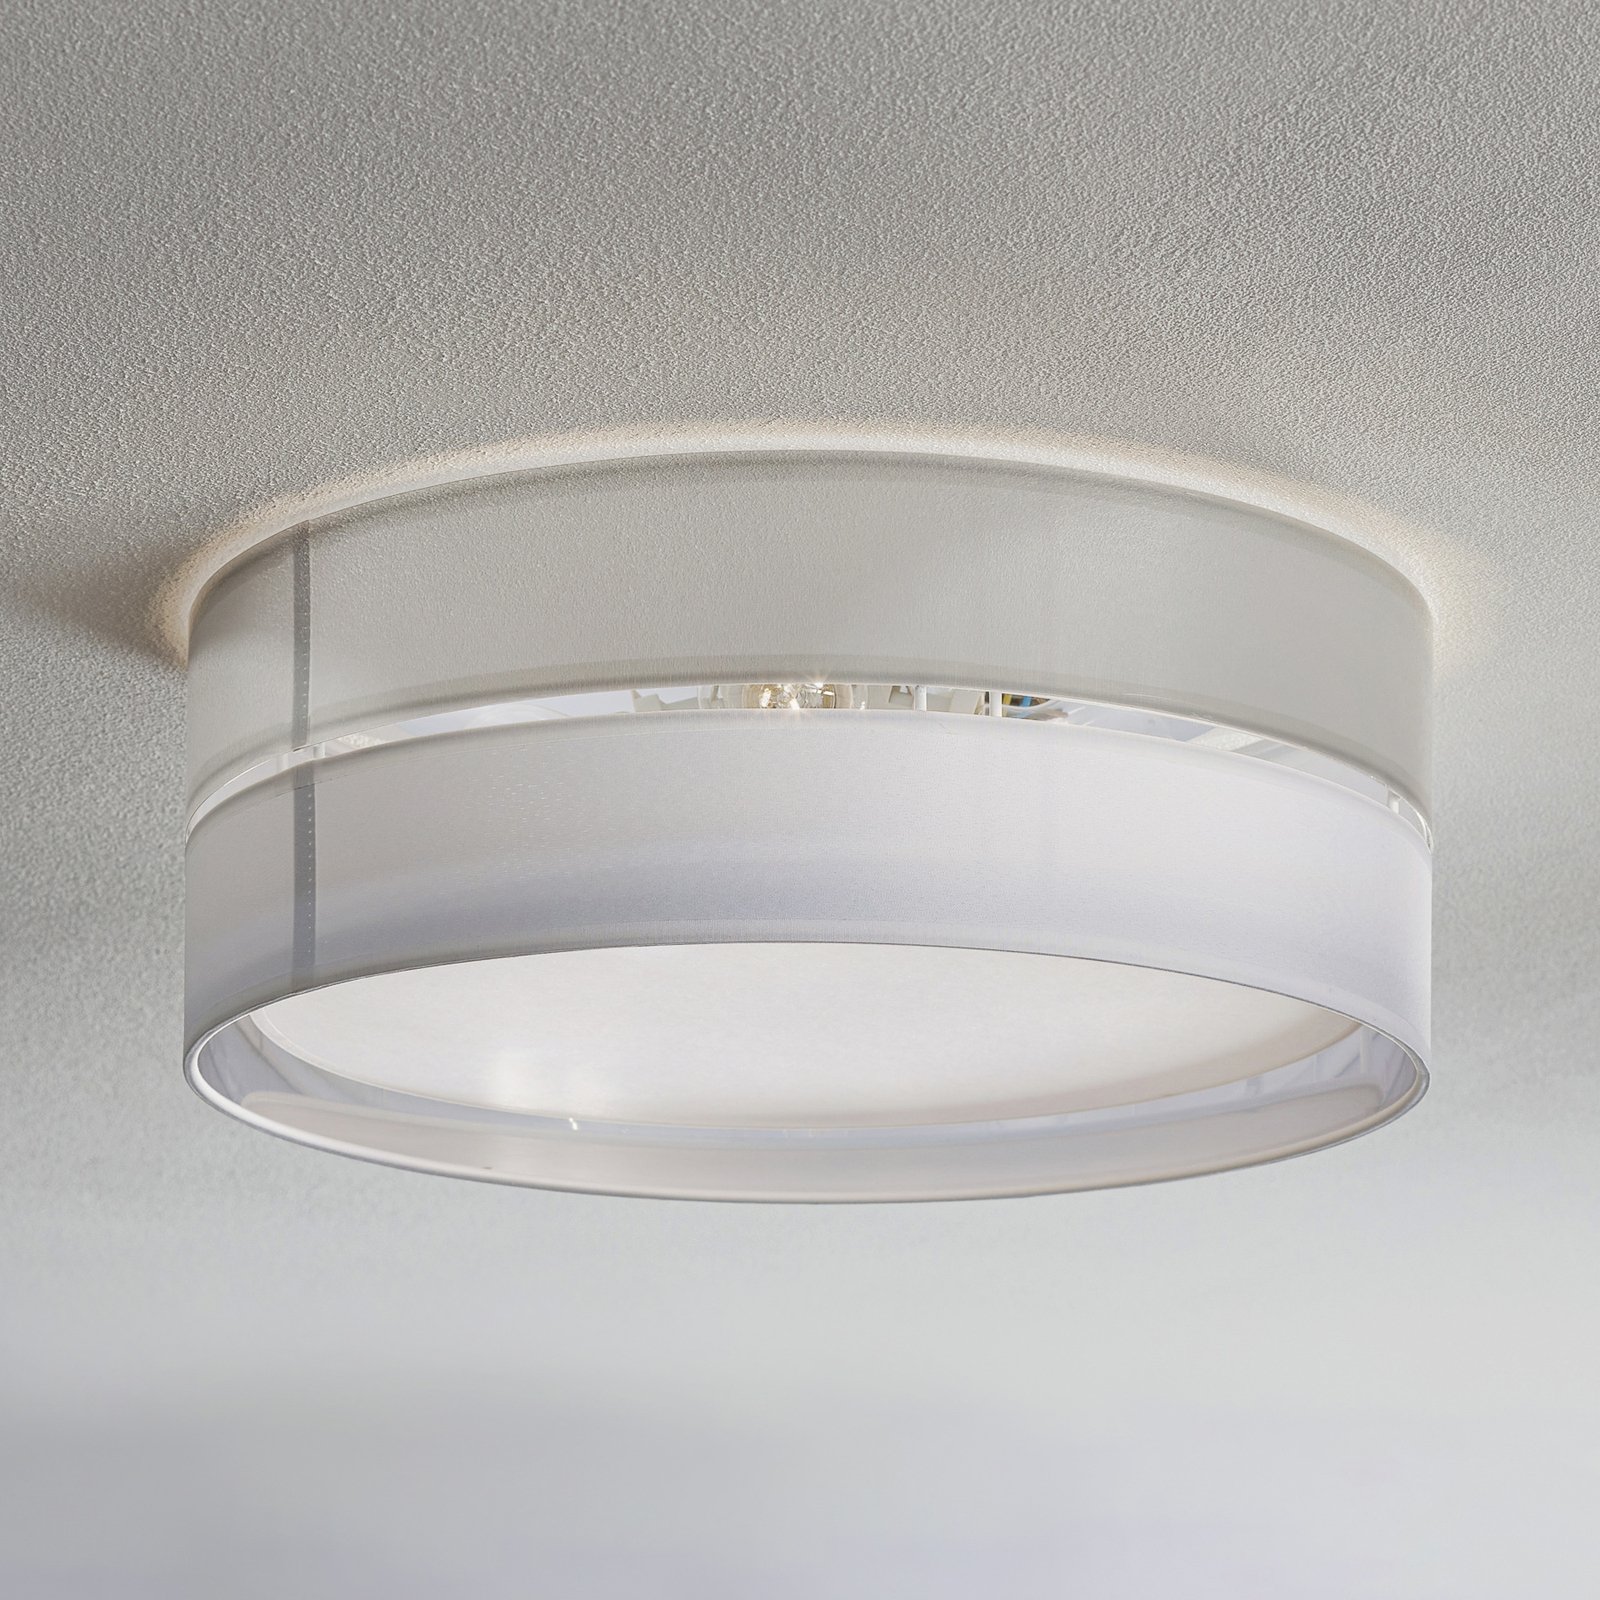 Hilton ceiling light, white/silver, Ø 45 cm